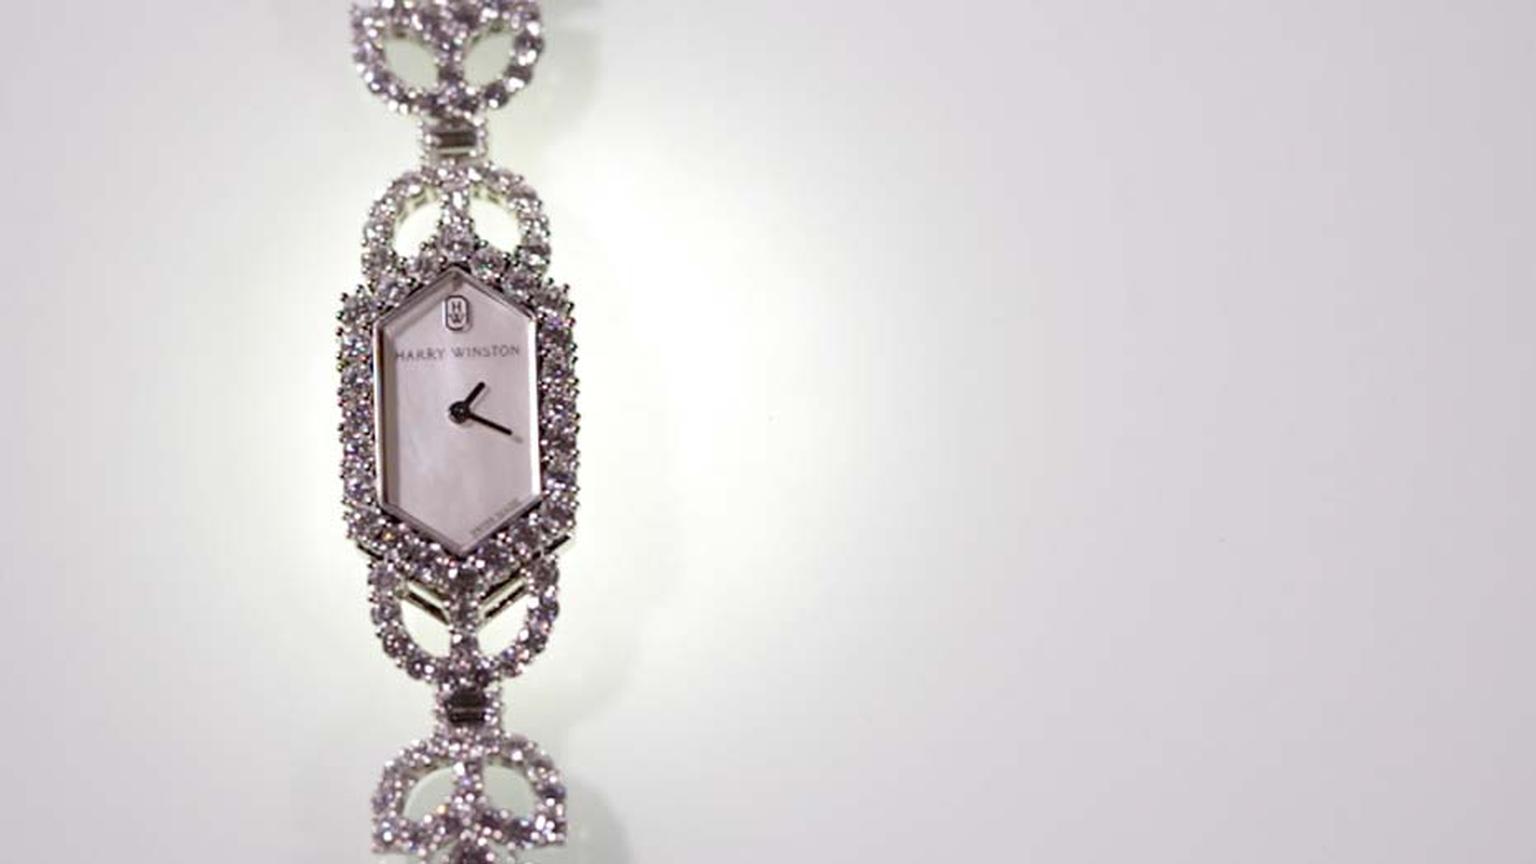 Harry Winston’s Art Deco diamond watch pays homage to the Roaring 20s, with a platinum bracelet set with 246 large brilliant-cut diamonds, alongside seven baguette-cut diamonds.